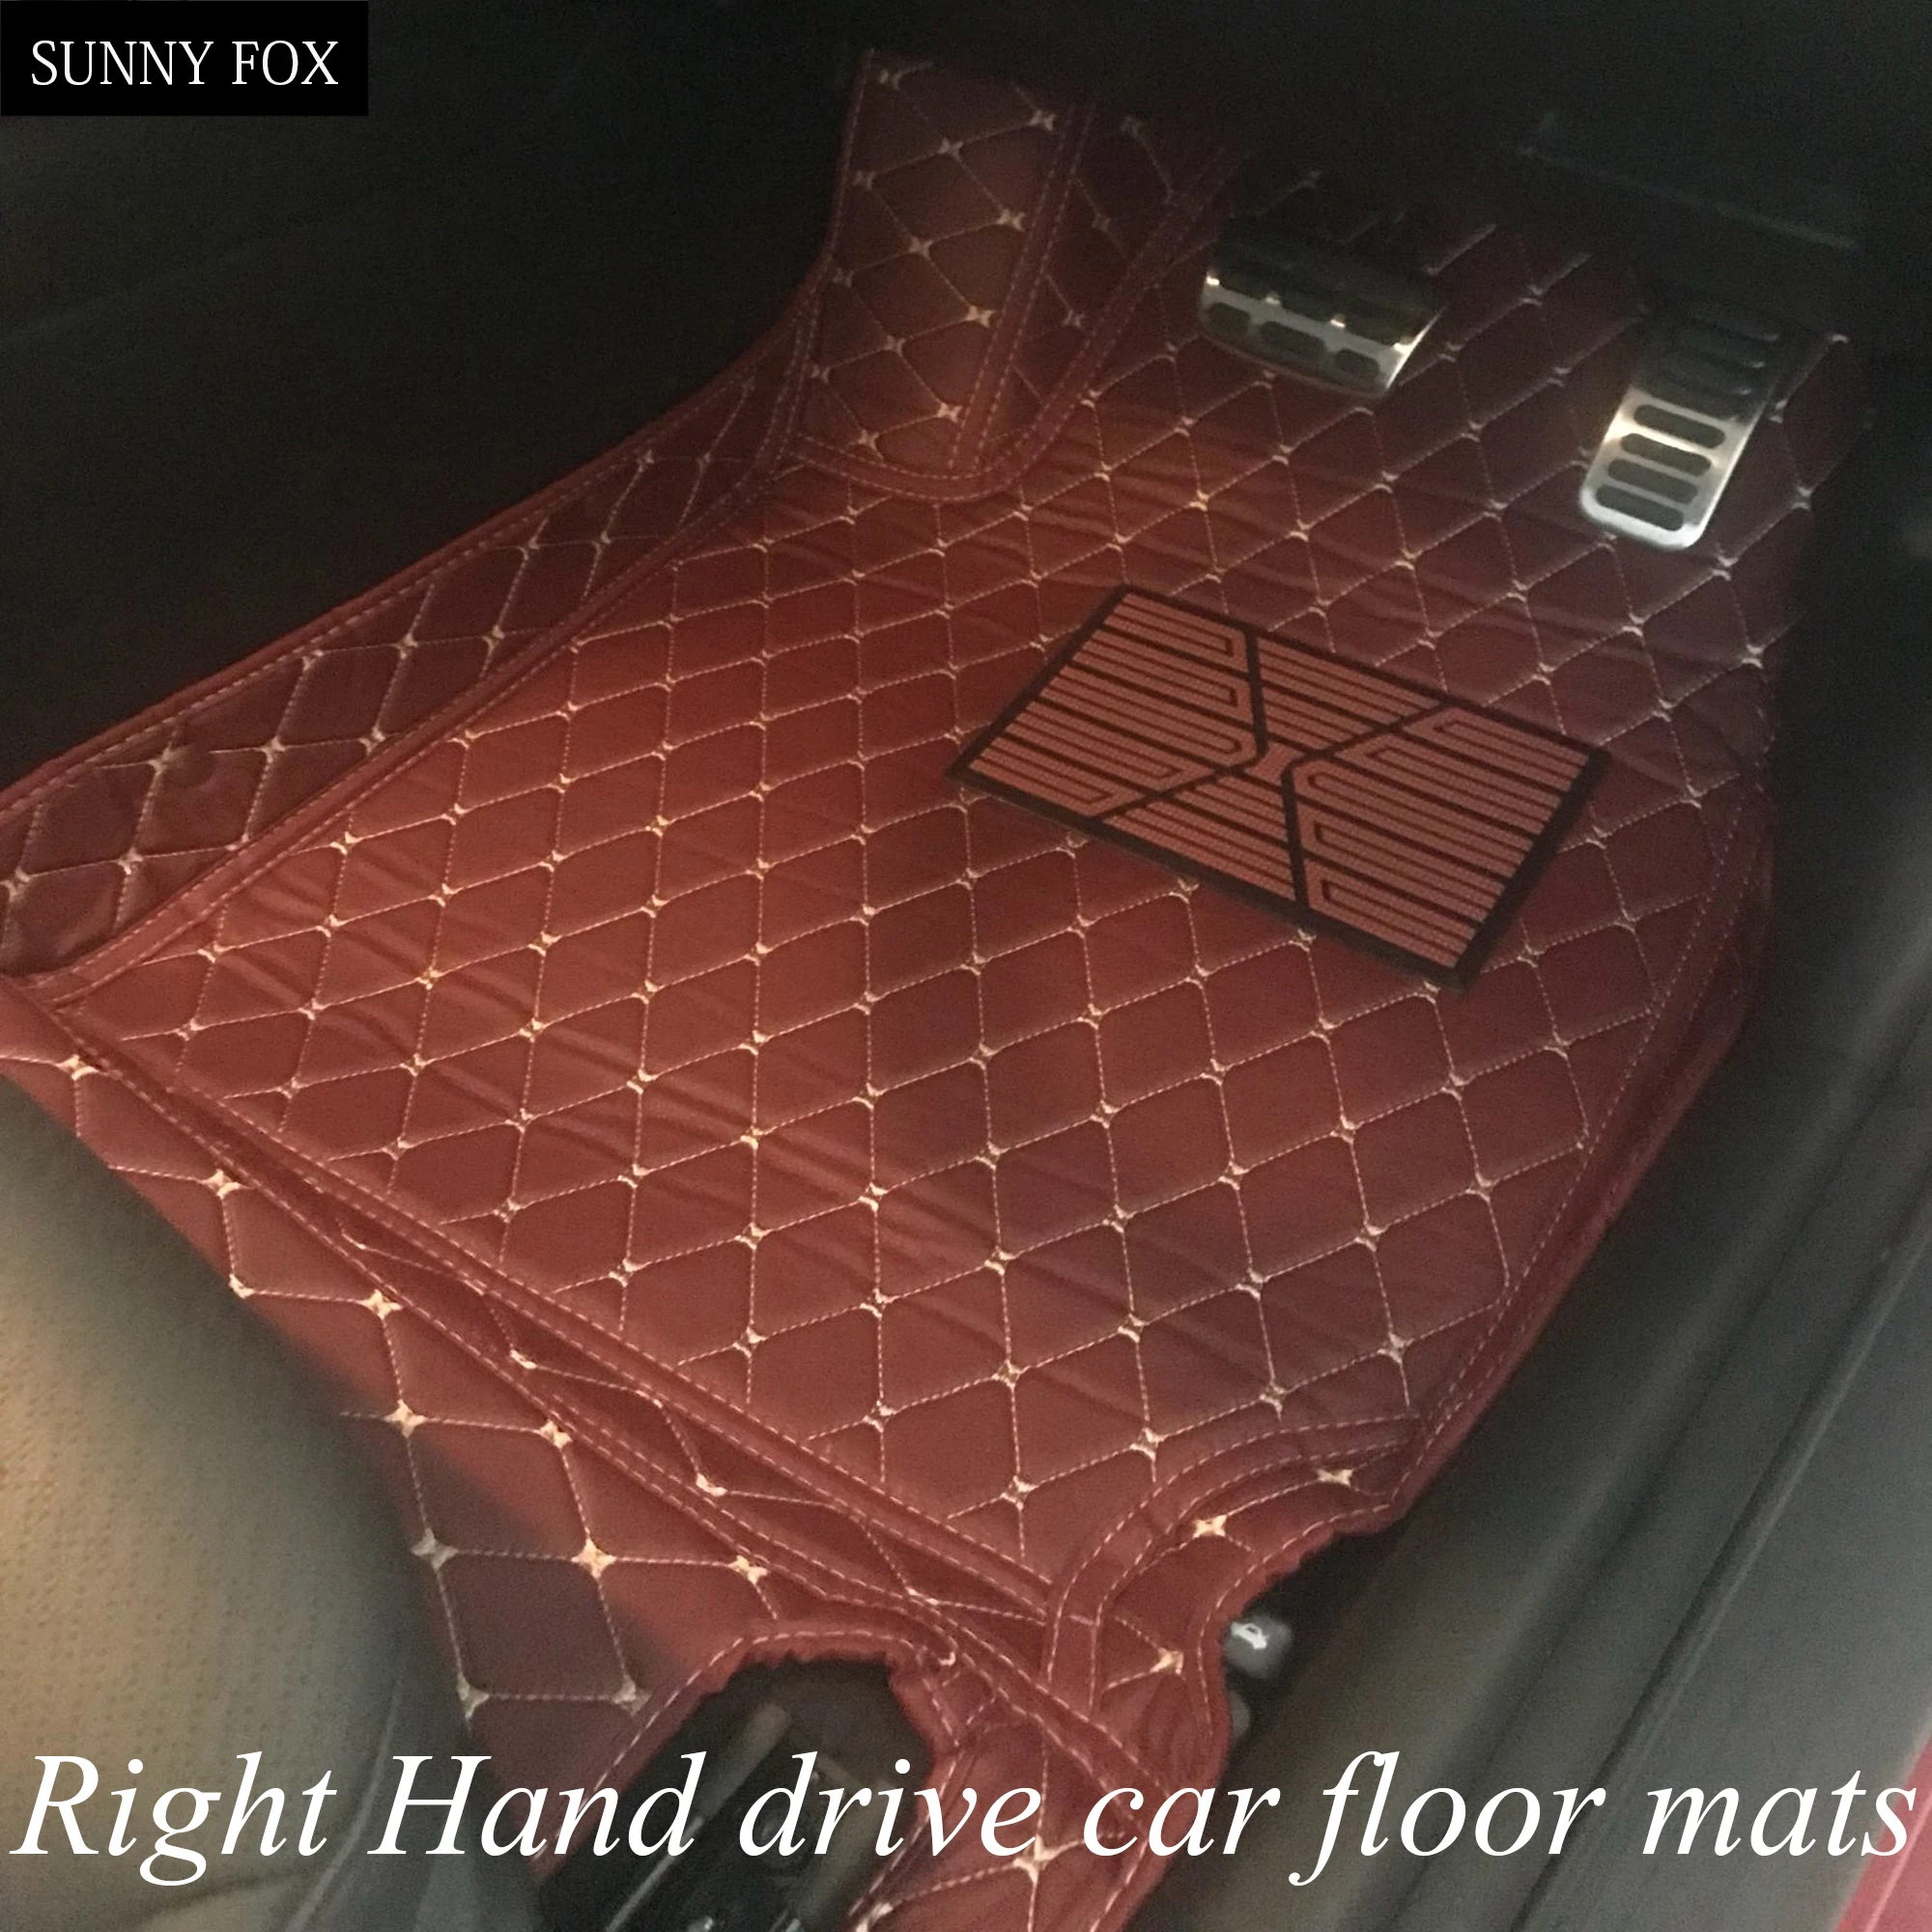 SUNNY FOX правый руль/RHD автомобильные коврики для Honda Accord 7th 8th 9th generation HRV vezel подходит для CRV CR-V City 6D car-sty